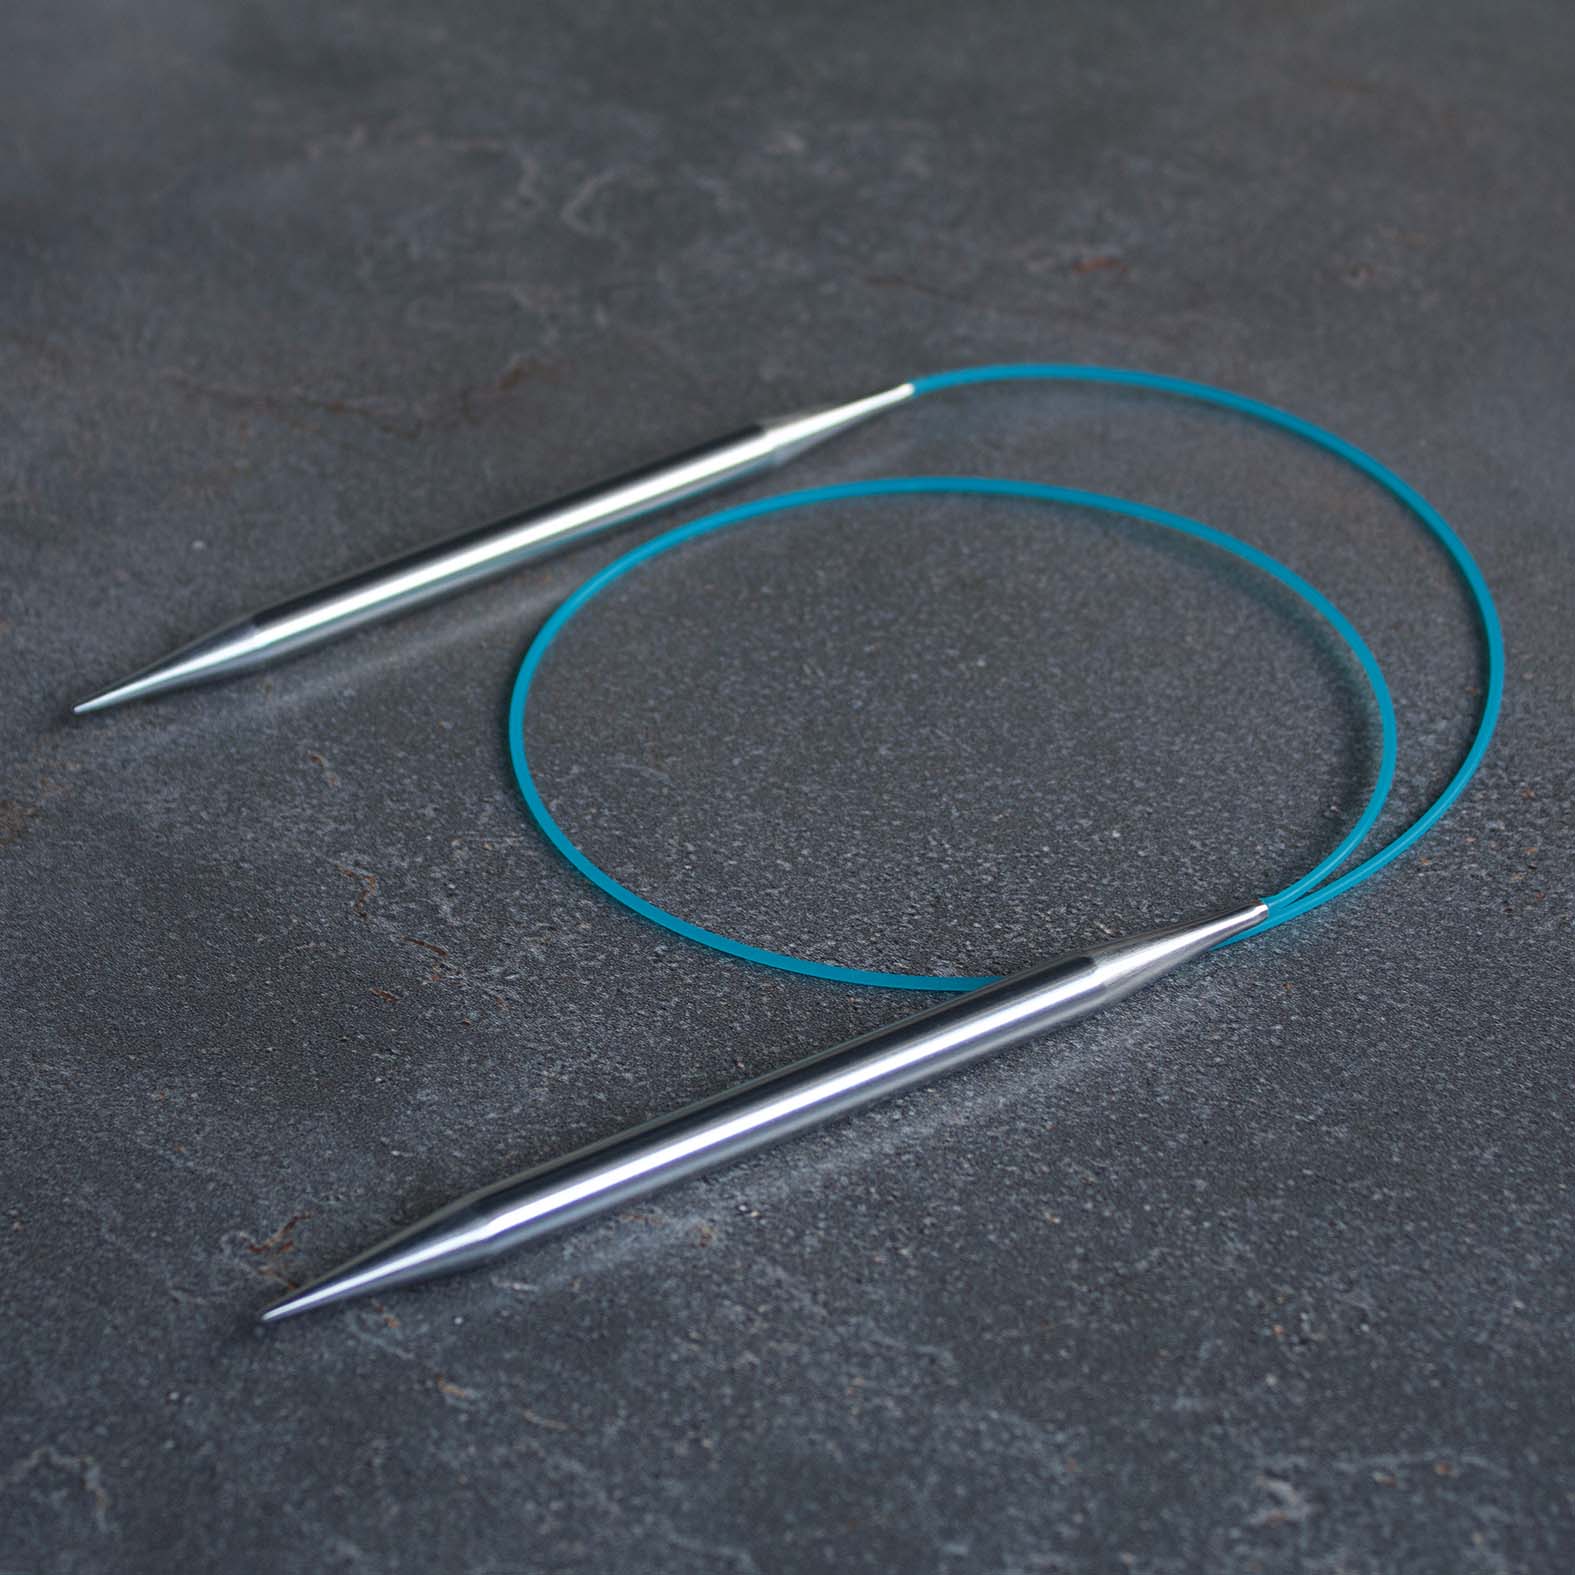 Ergonomic Circular Needle Set, Knitting Needles